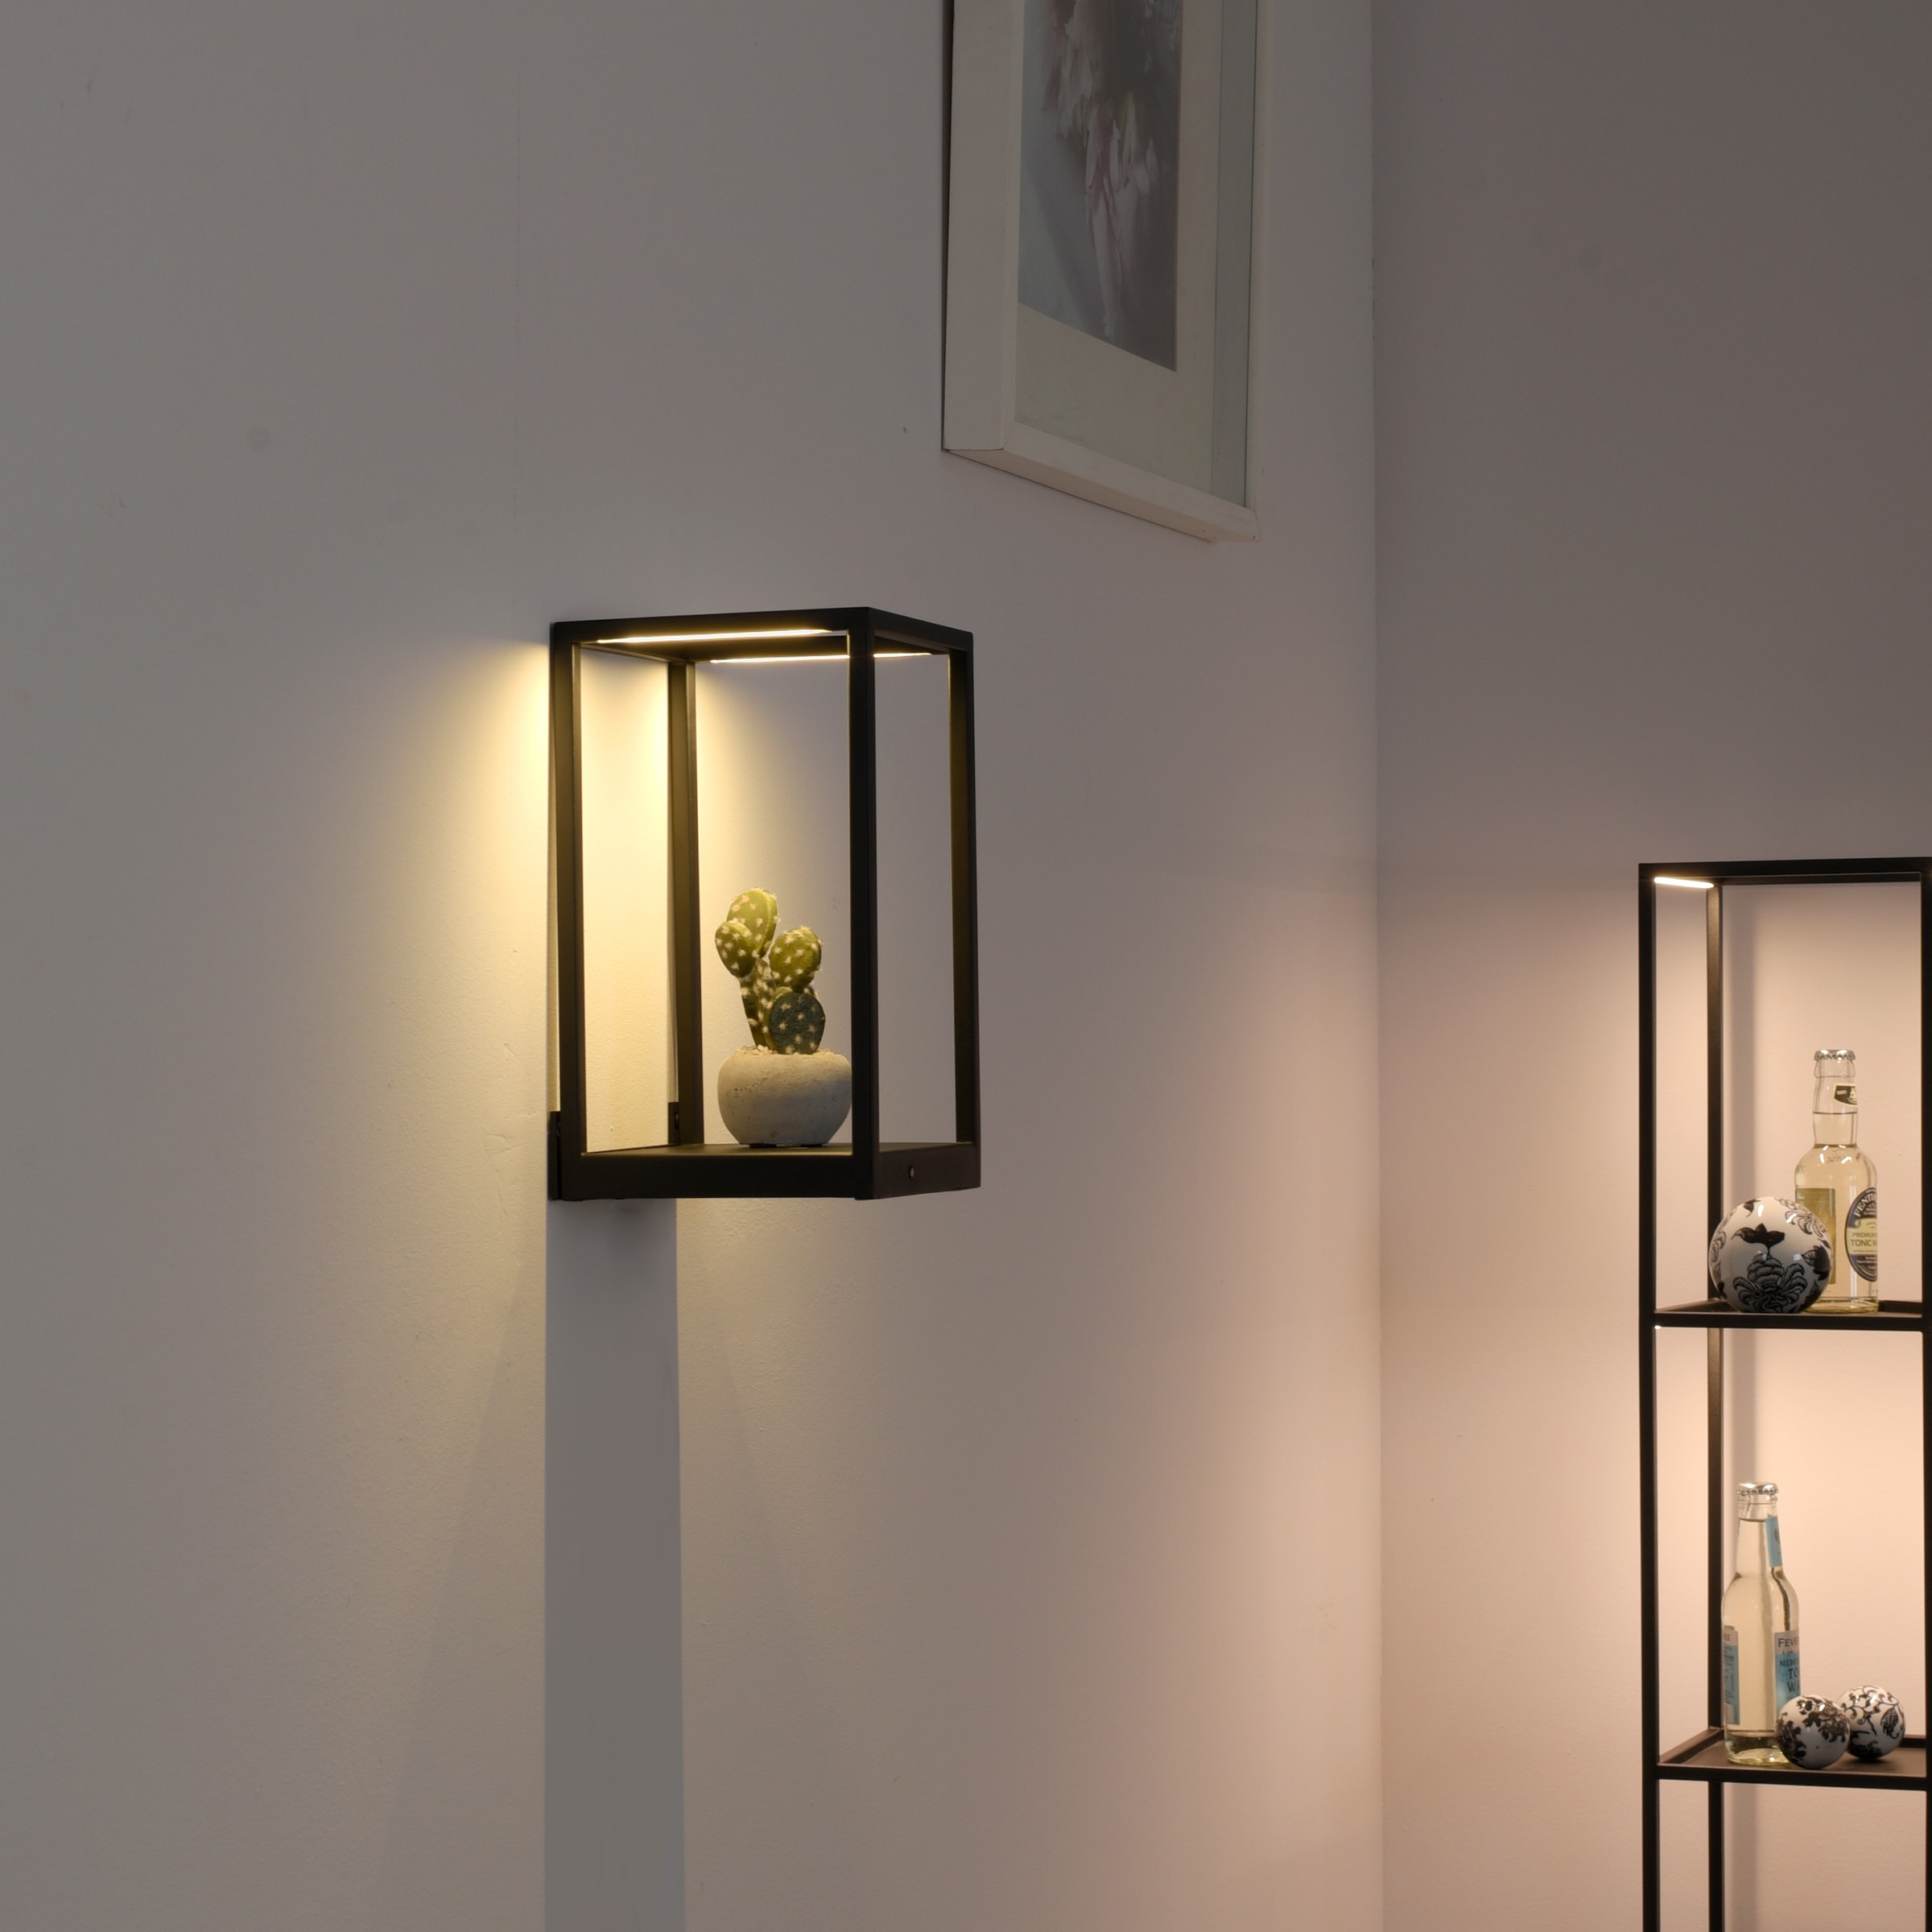 Places of Style Wandleuchte »Cashel«, 2 flammig-flammig, LED Wandlampe,  3000 K, inkl. 3-Stufen-Touchdimmer Regal bestellen online bei OTTO